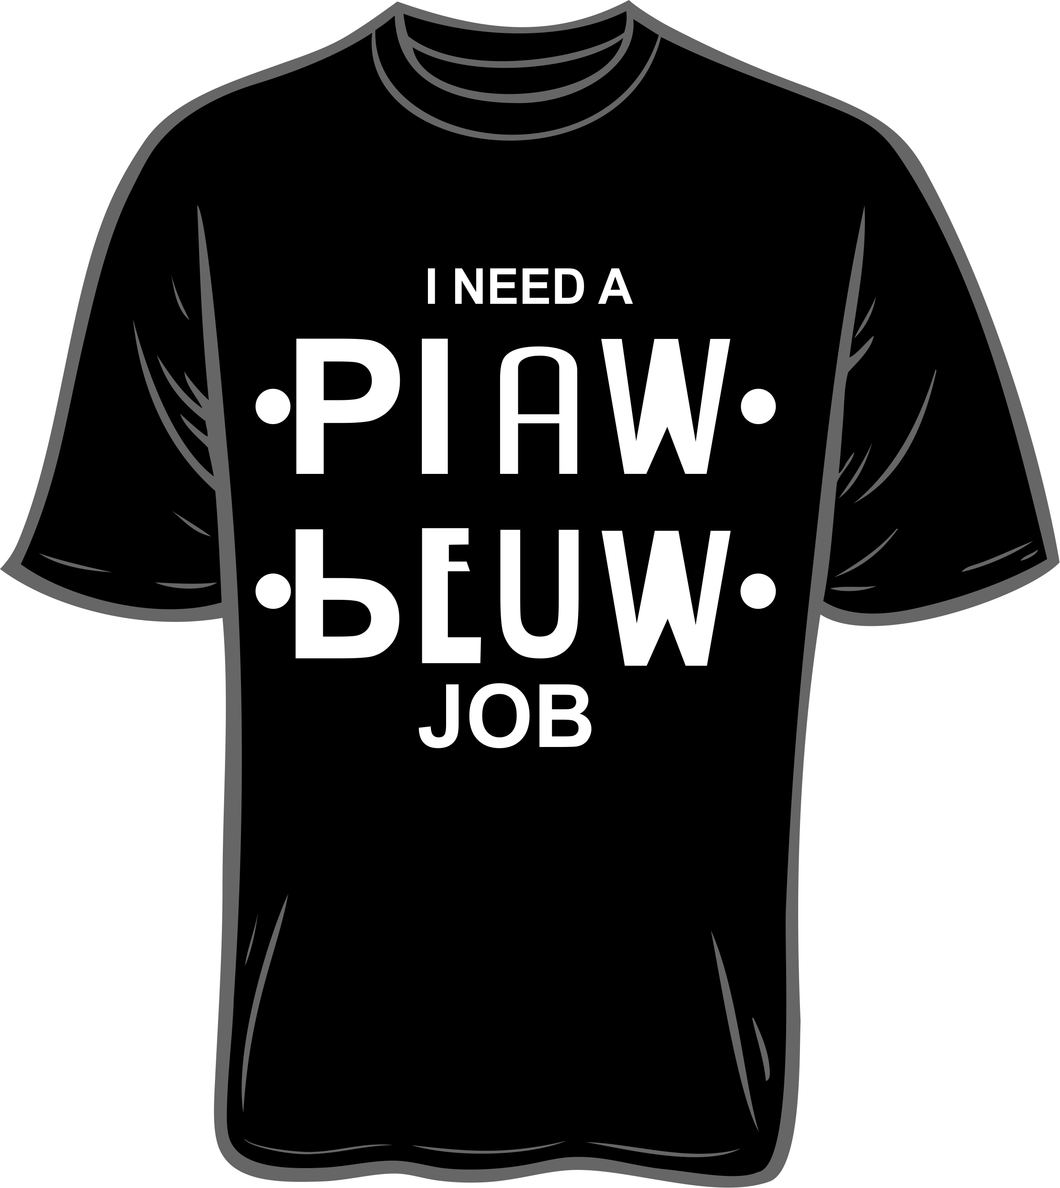 Plaw Beuw Job, Christmas, need, I Need A Blow Job I Need A Plaw Beuw Job, Blow Job, Good Job, job, needle, I Need A Blow Job, I Need A Plaw Beuw Job